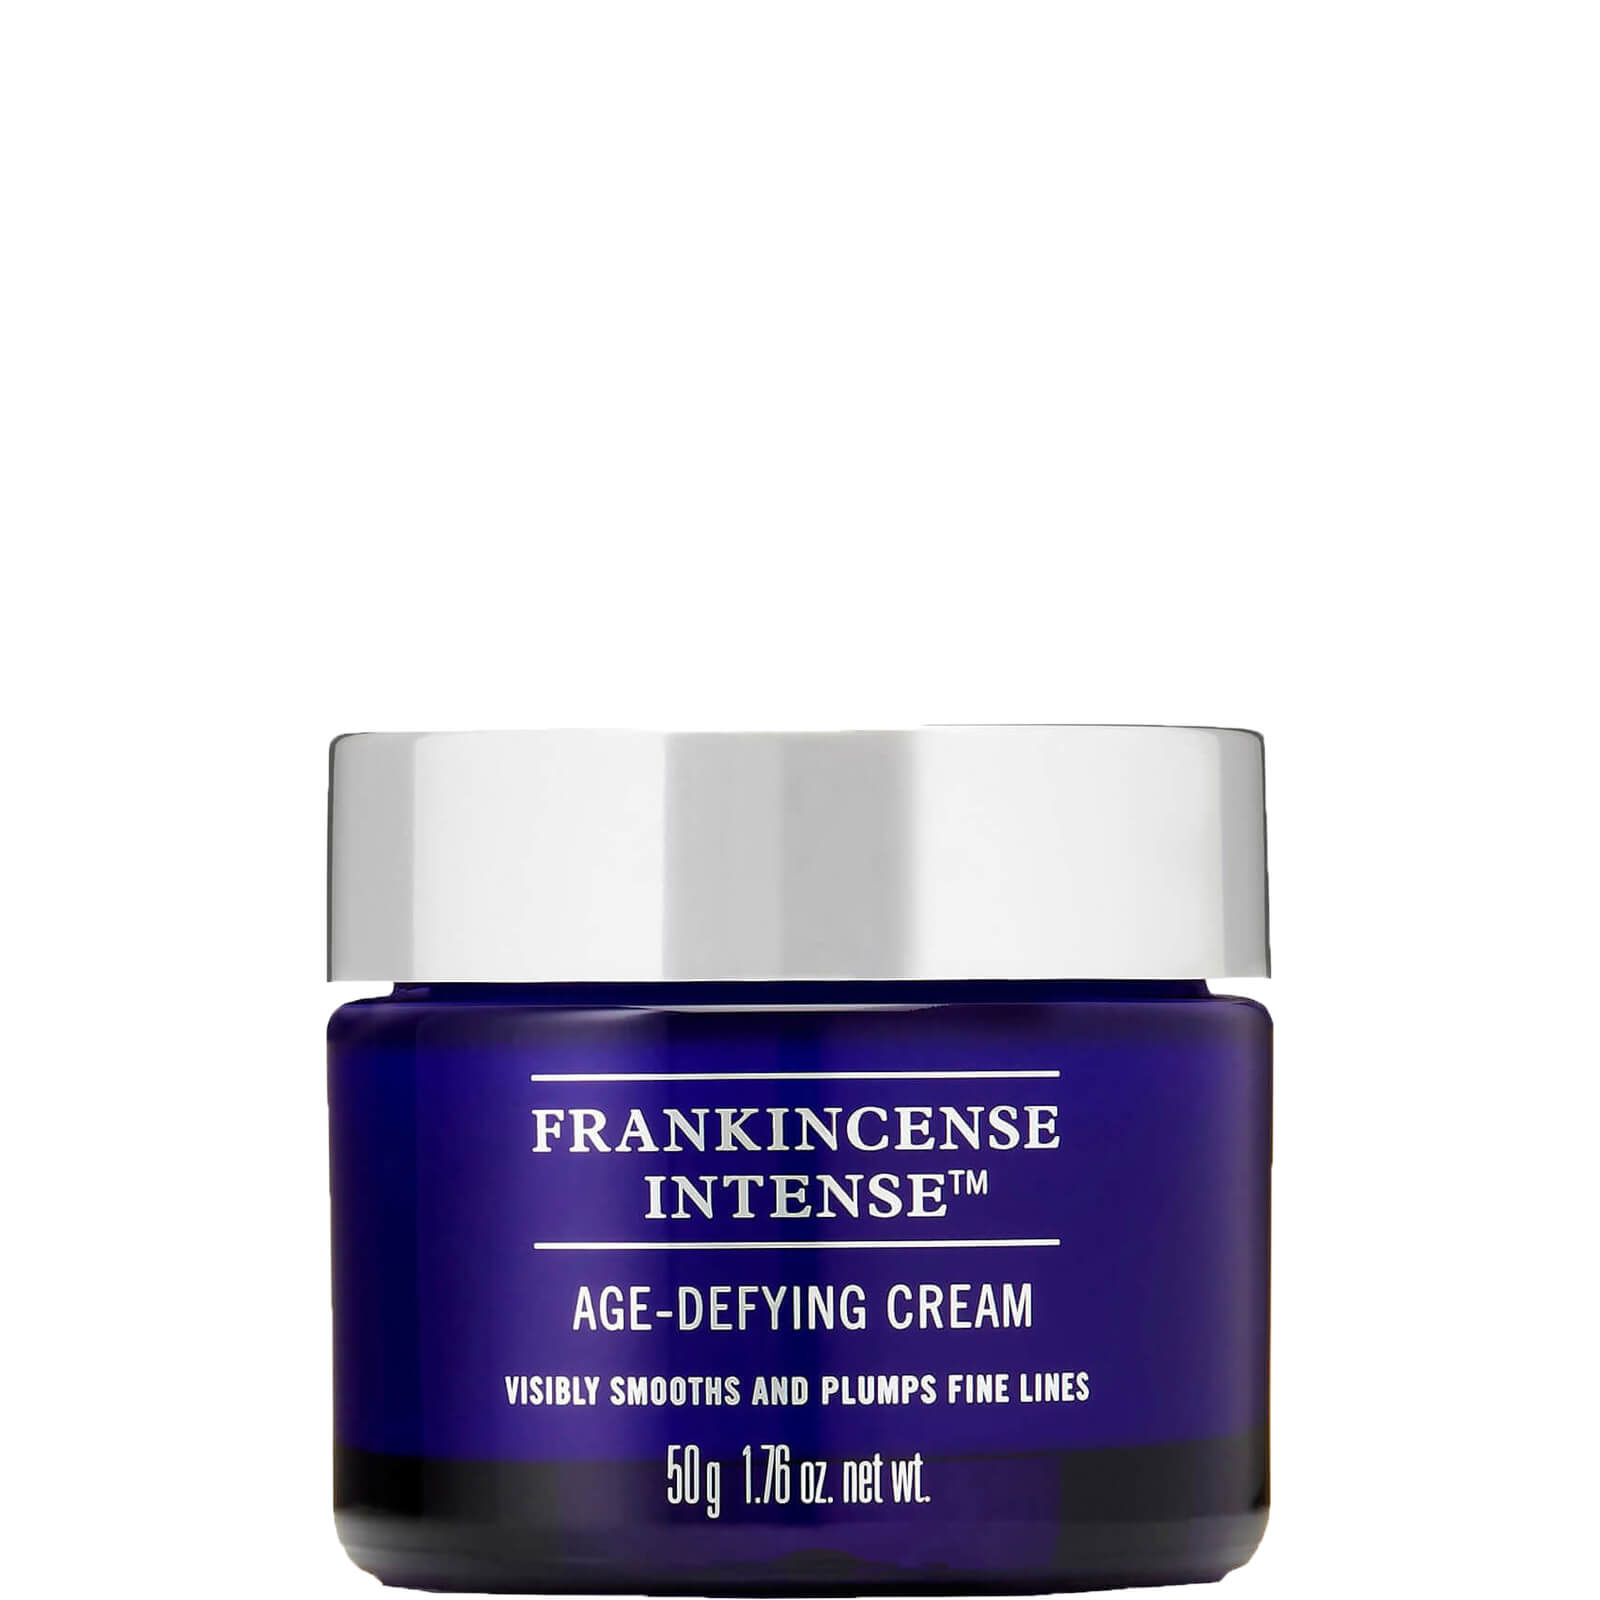 Frankincense Intensetm Age-Defying Cream 50g